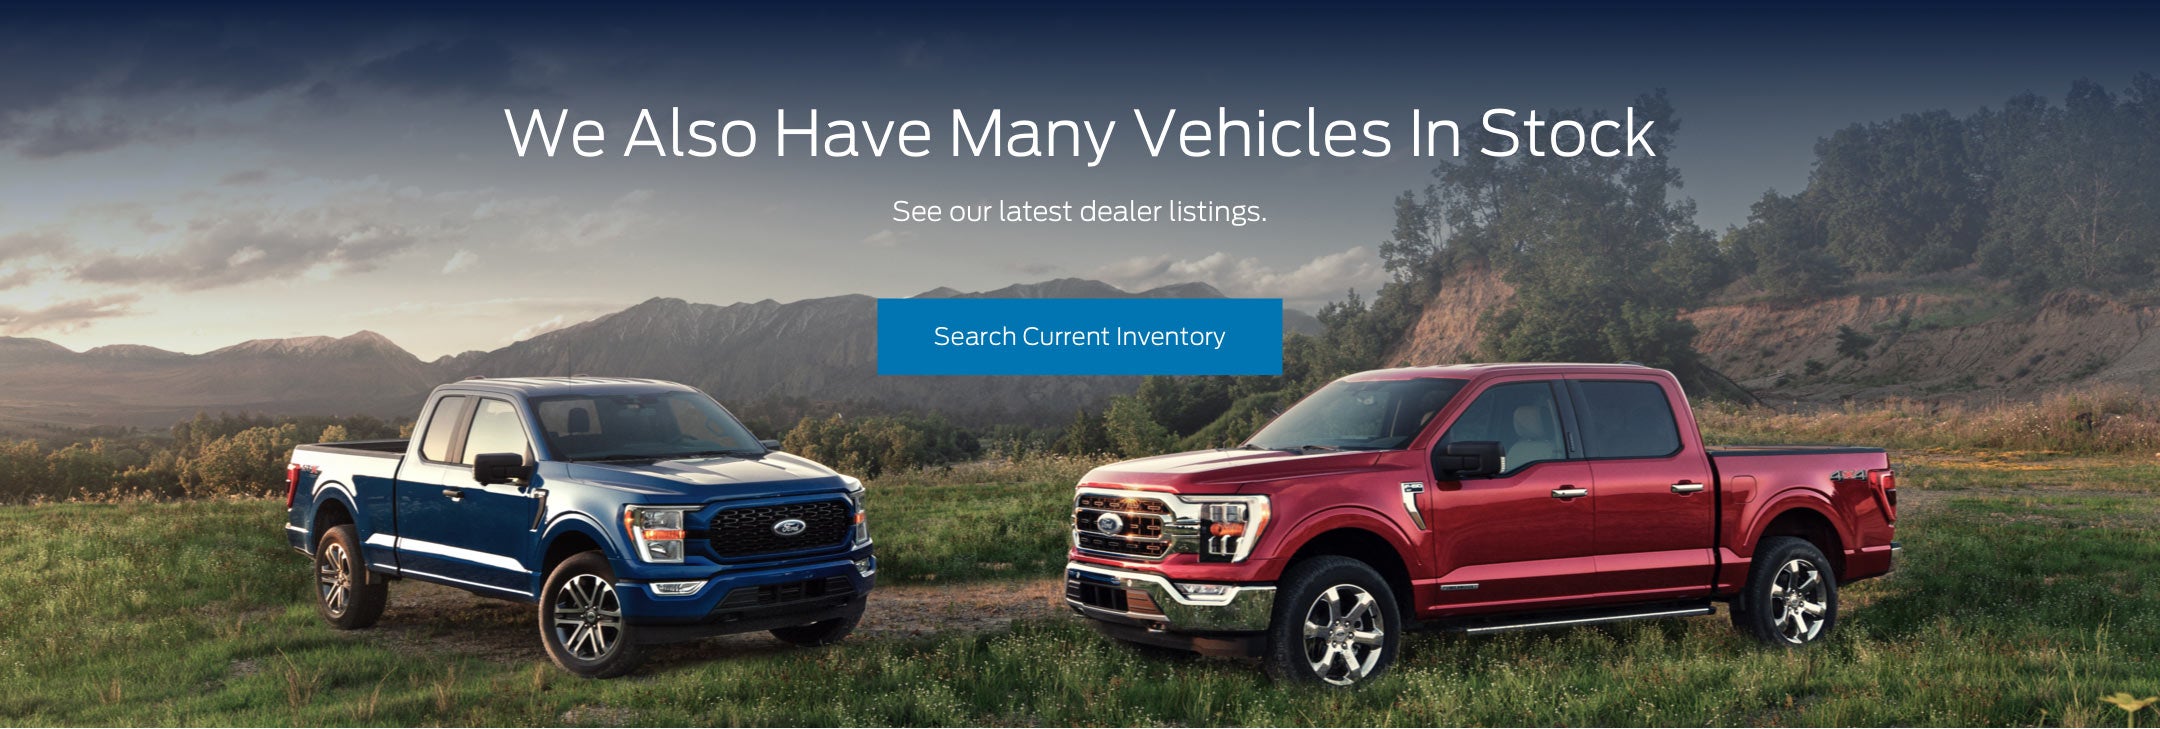 Ford vehicles in stock | Tony Serra Ford in Sylacauga AL